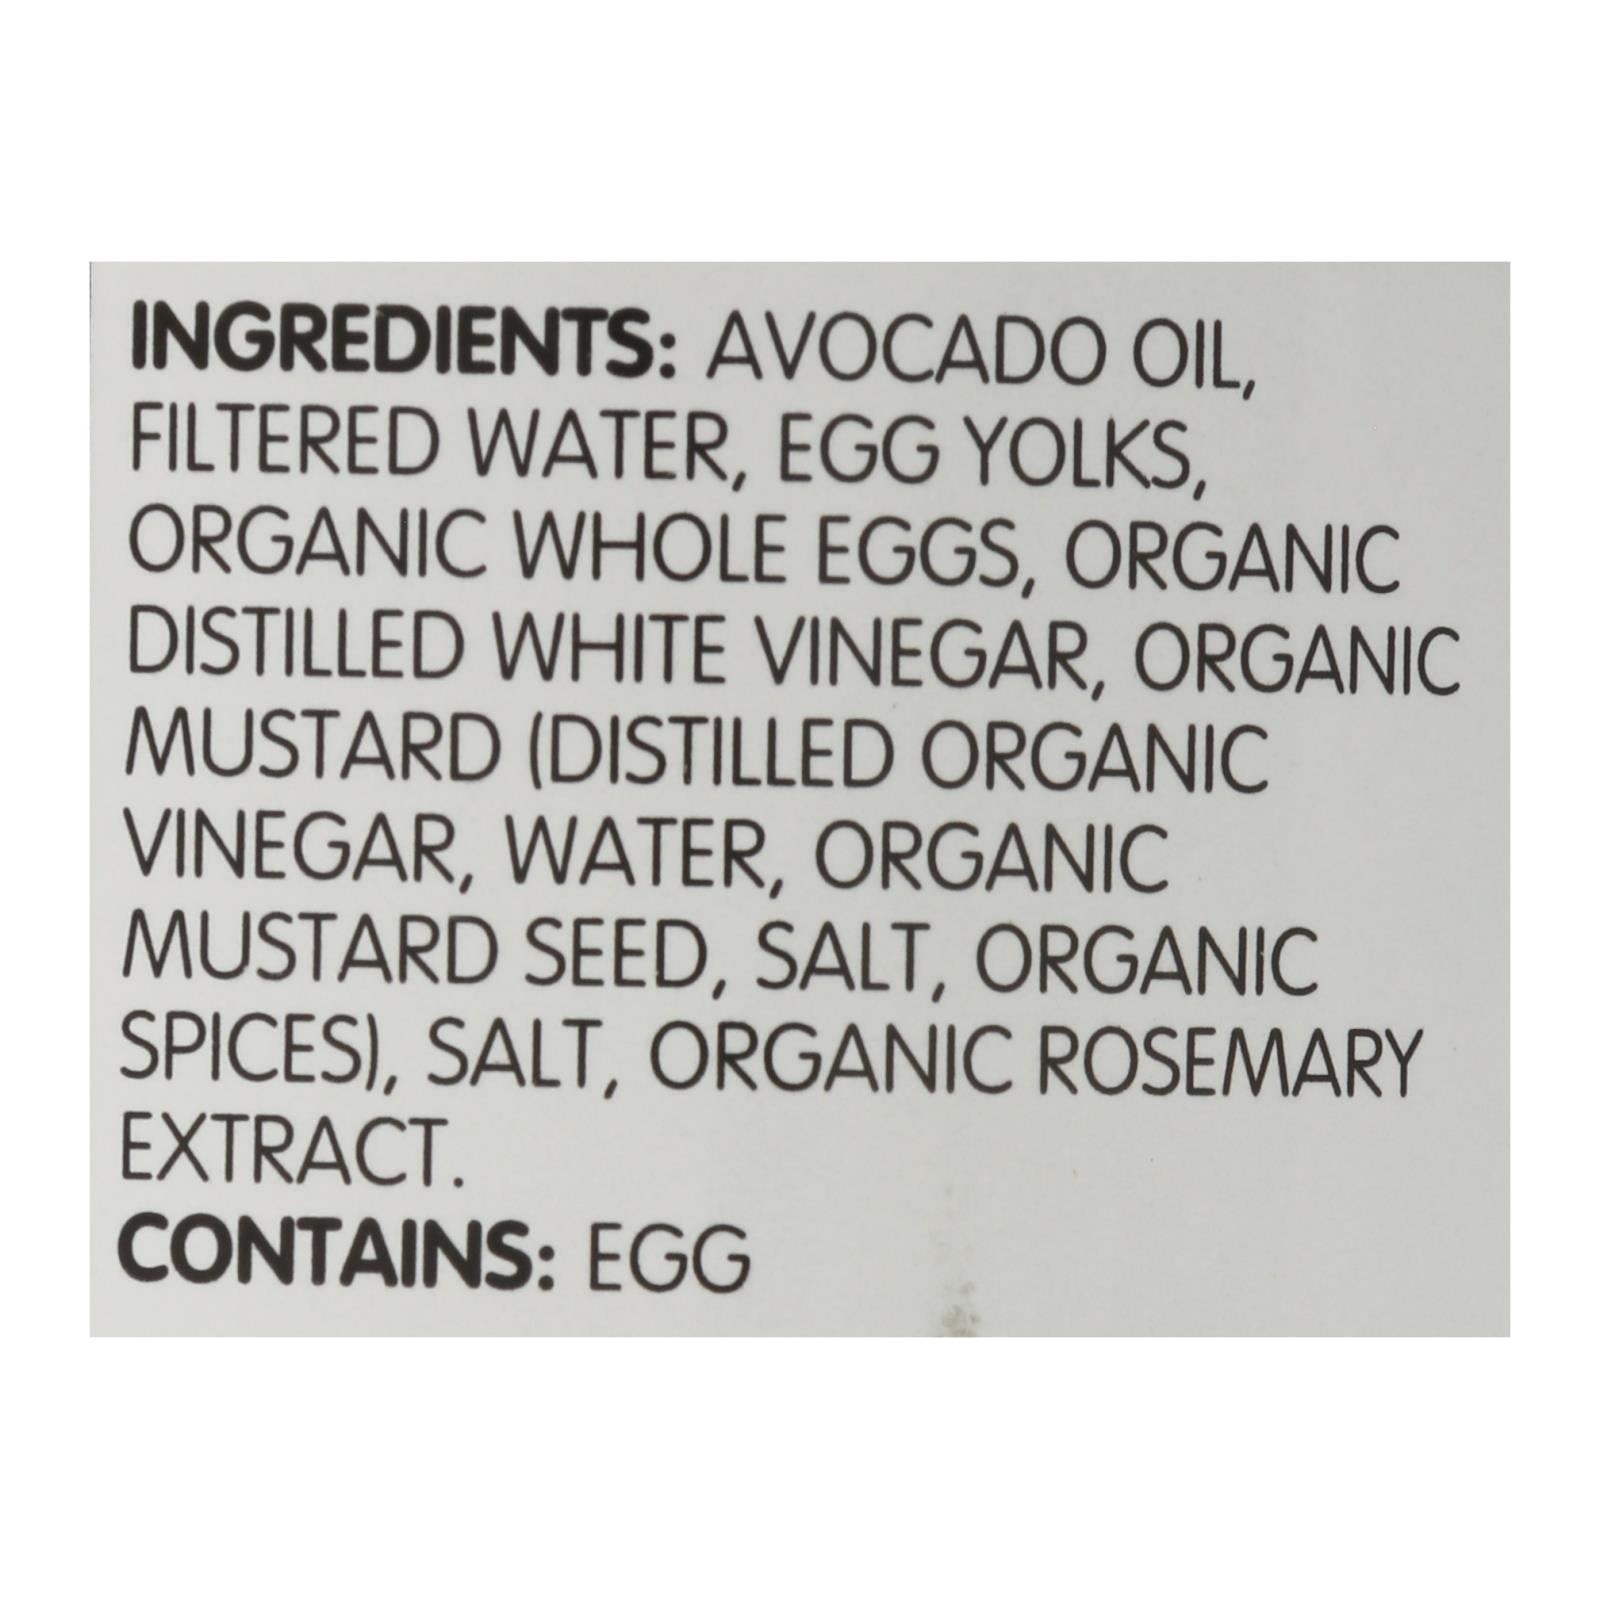 Chosen Foods Avocado Oil - Mayo - Case Of 6 - 12 Oz.